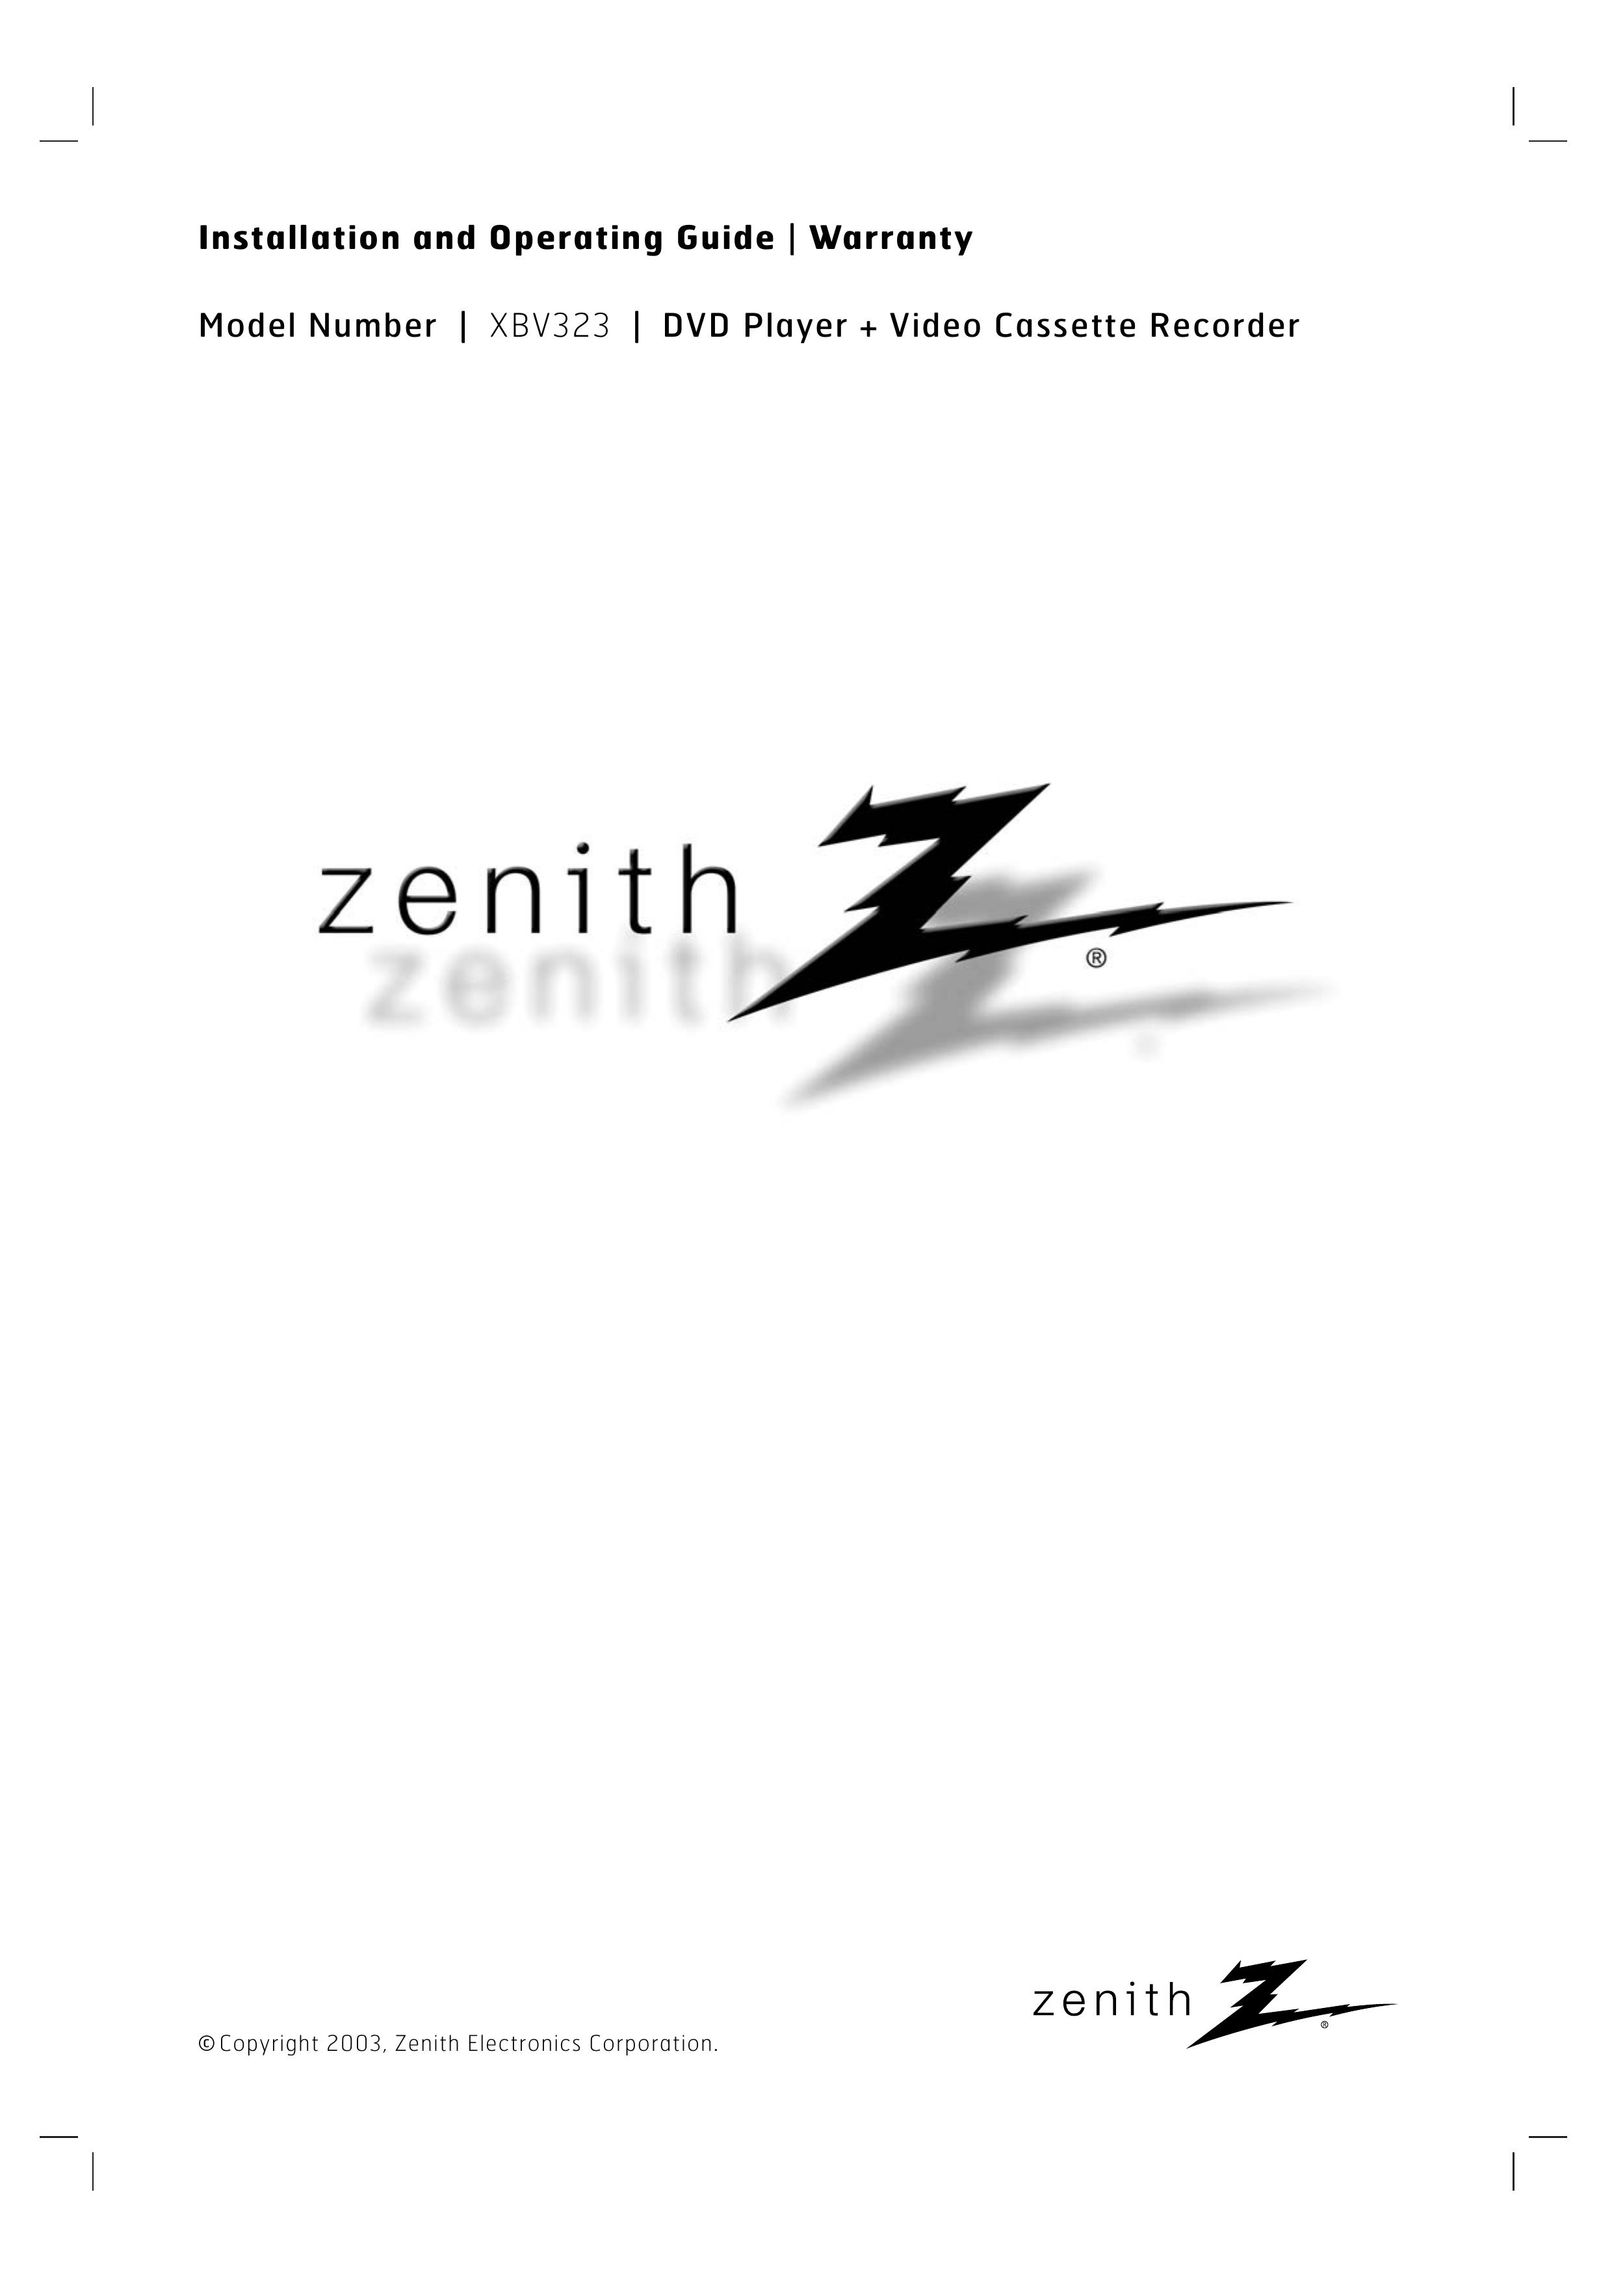 Zenith XBV323 DVD VCR Combo User Manual